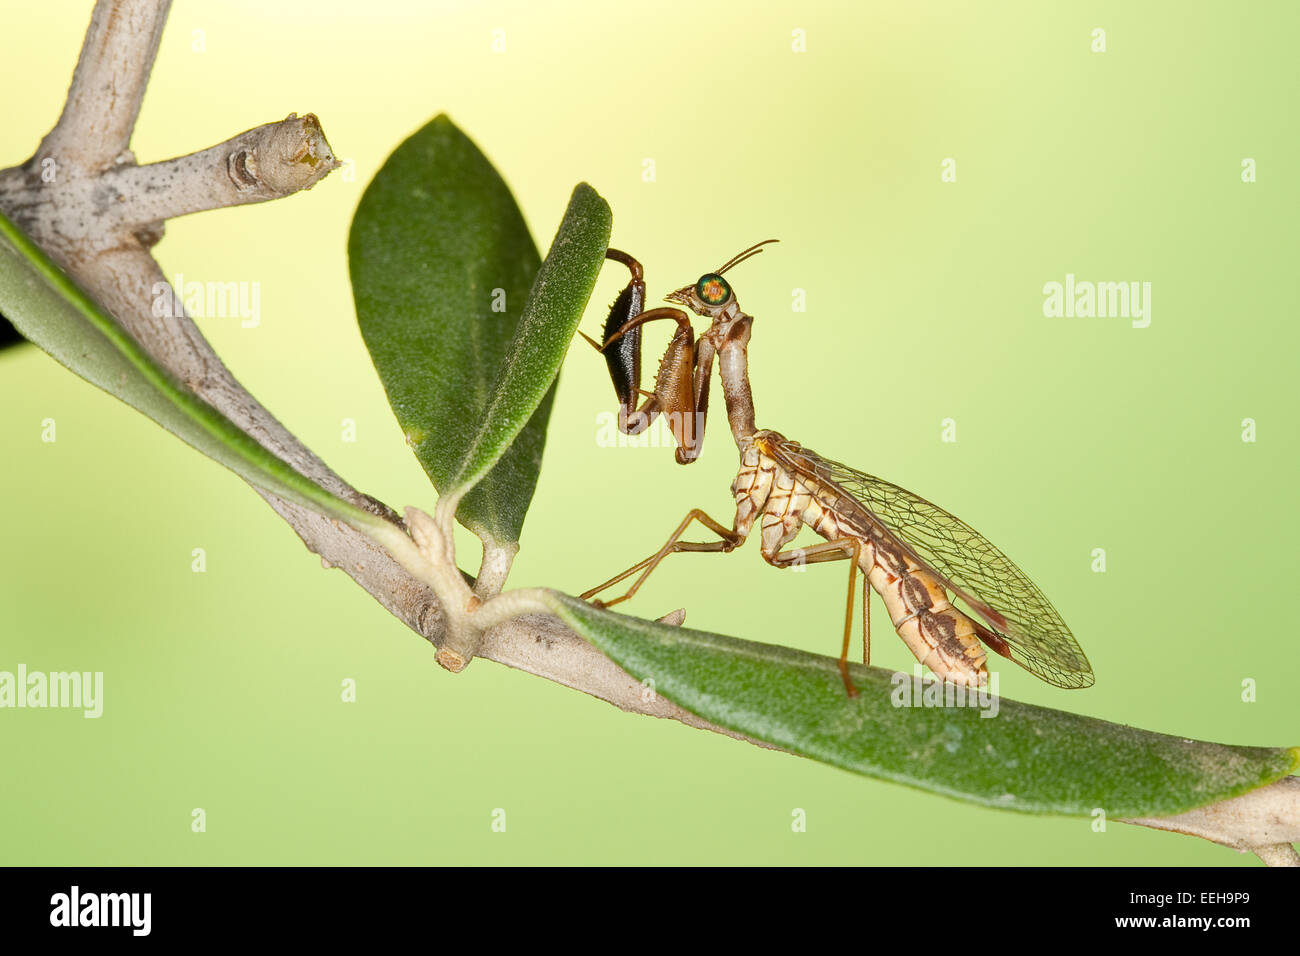 Steirische Fanghaft, Mantispa styriaca, syn. Poda pagana, Mantispa pagana, mantidfly, mantis fly, mantispid, Mantispe de Styrie Stock Photo